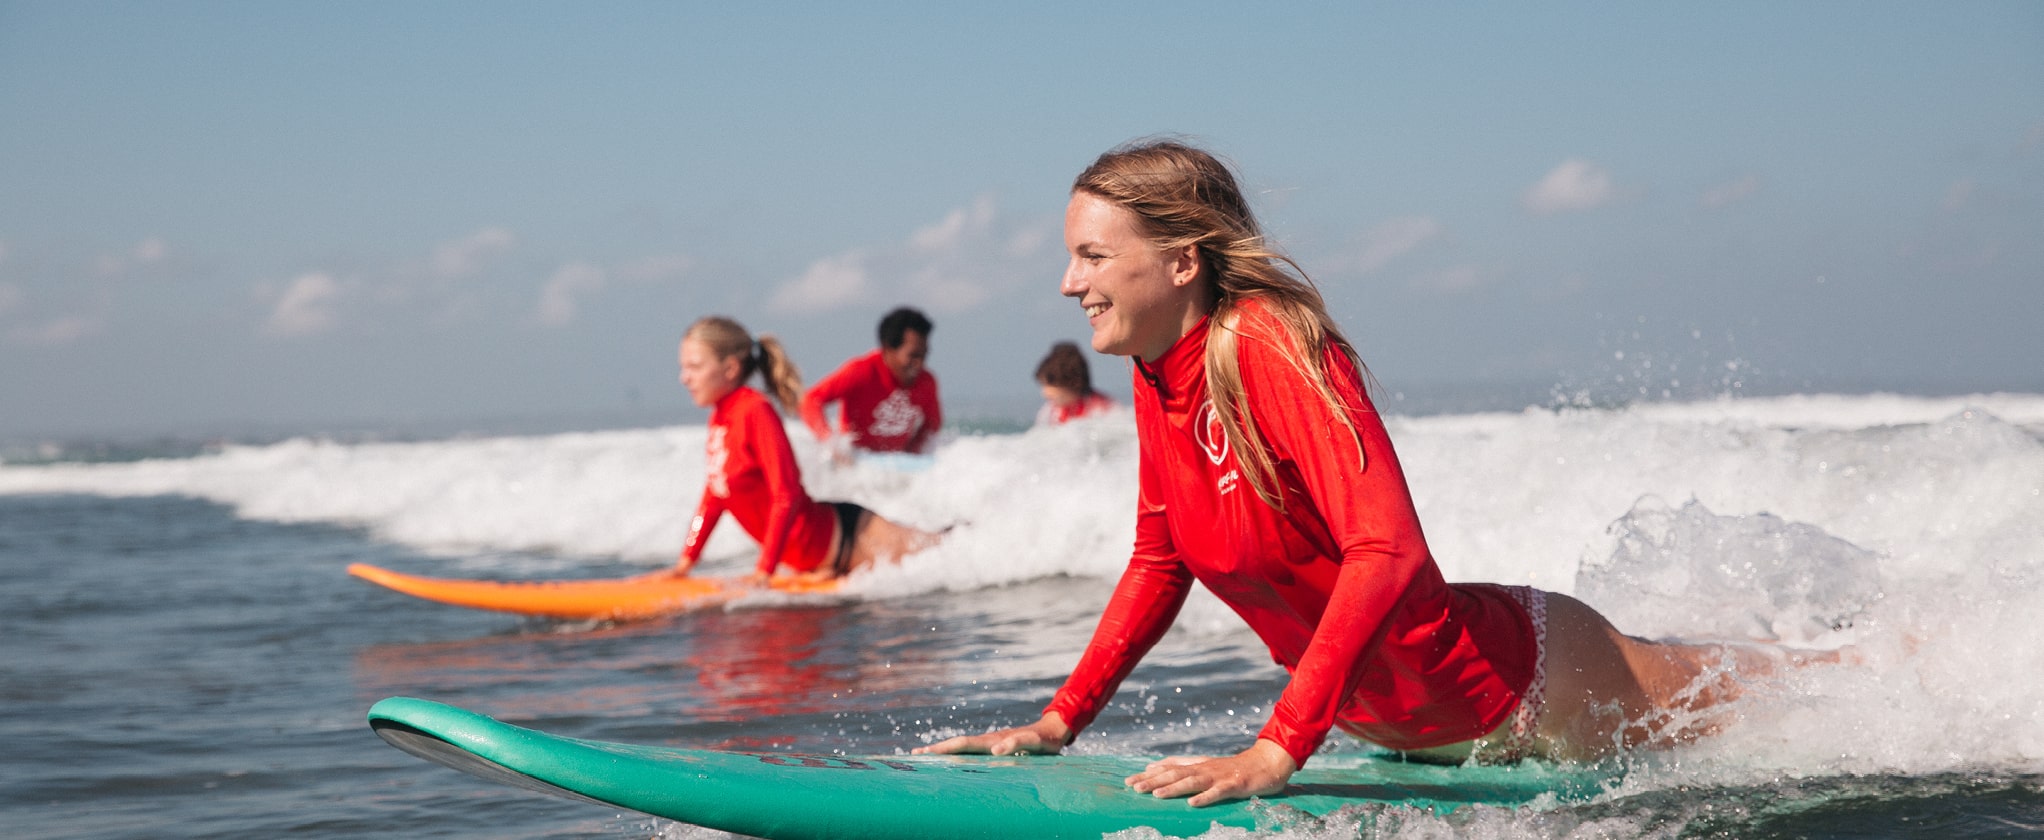 Beginner surf lessons in Bali